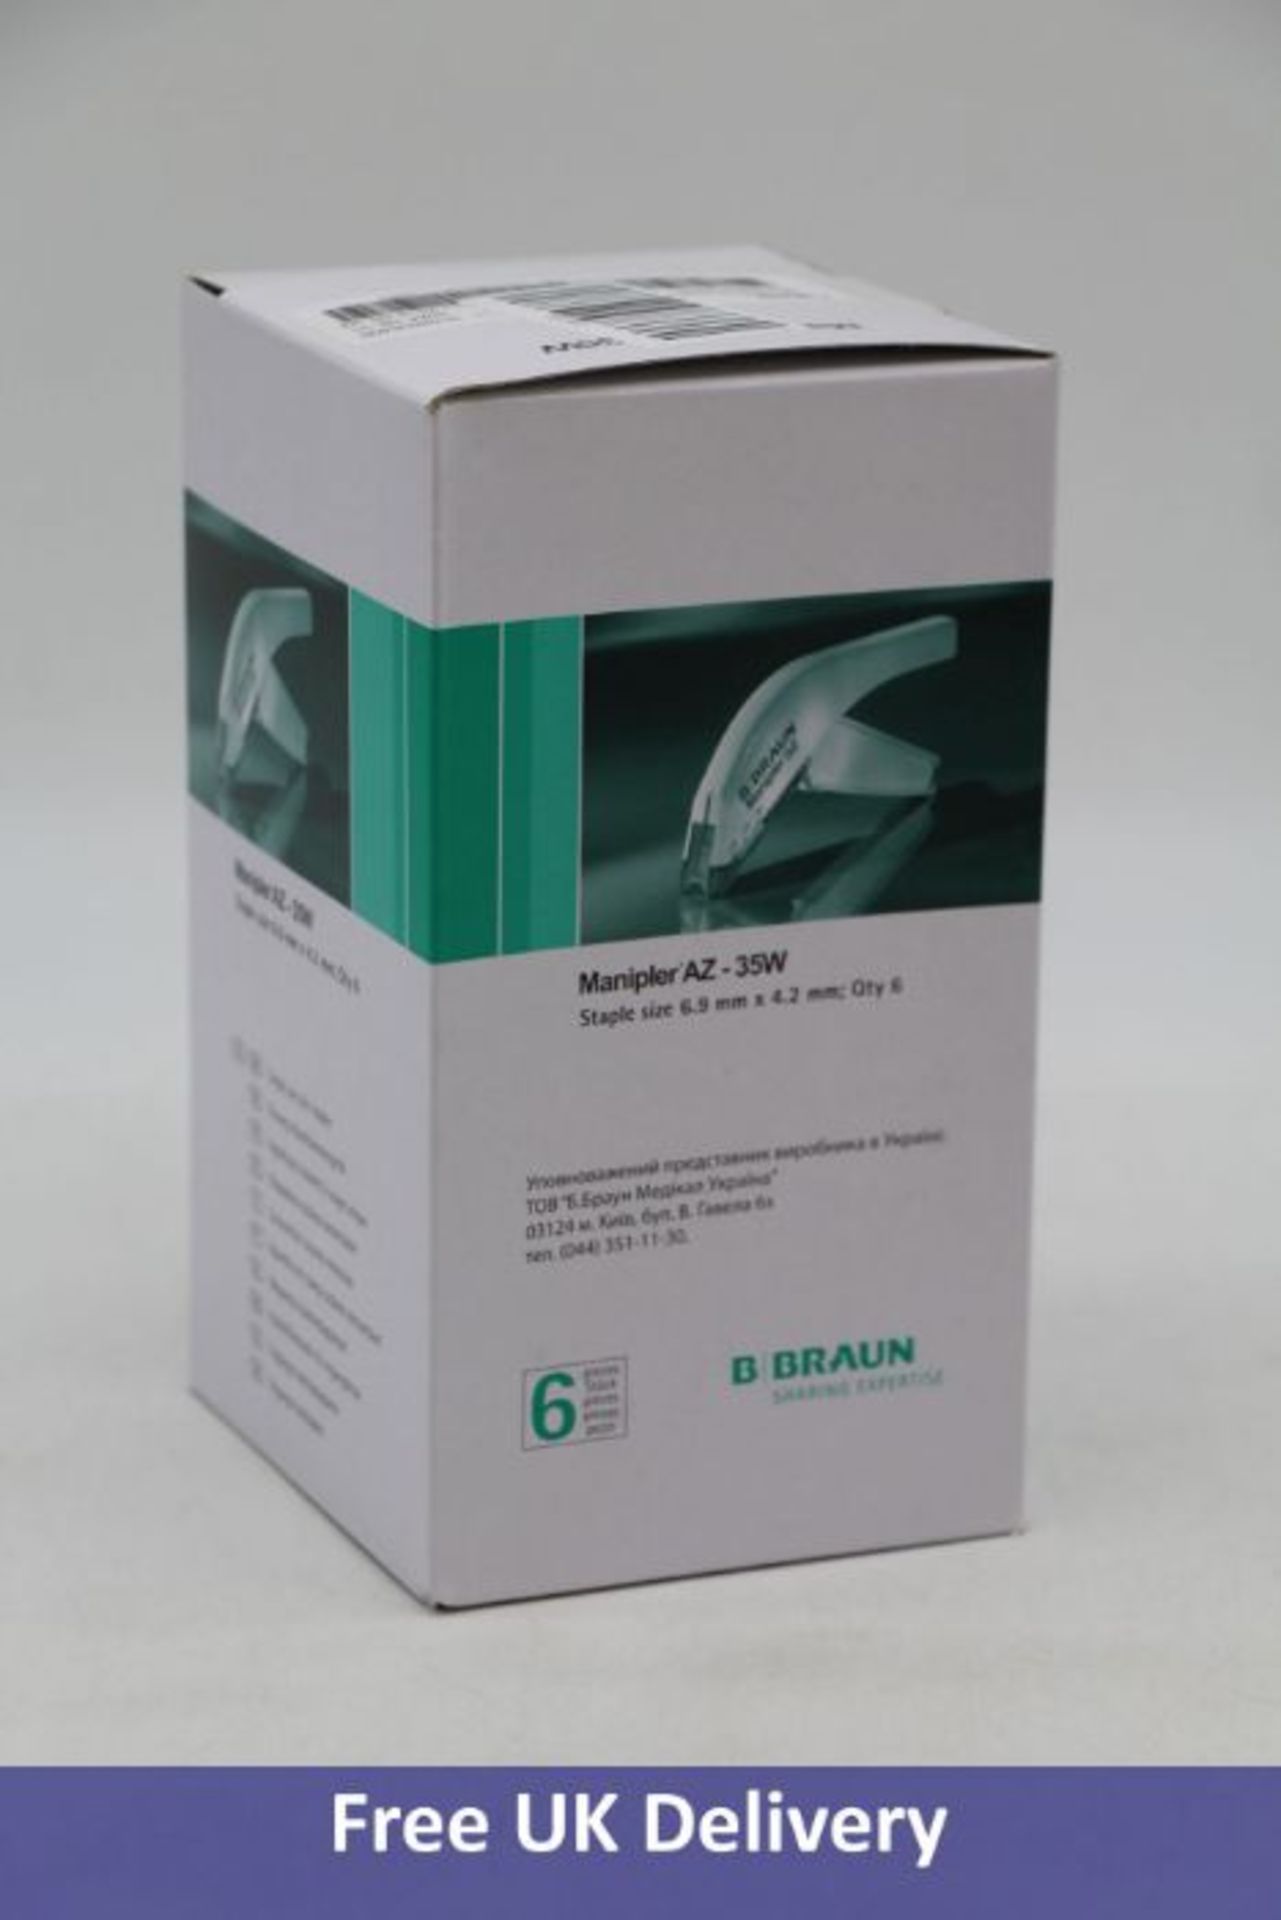 Eight Braun Manipler AZ – 35W Skin Stapler, Size 6.9mm x 4.2mm, 6 Per Pack - Image 4 of 4